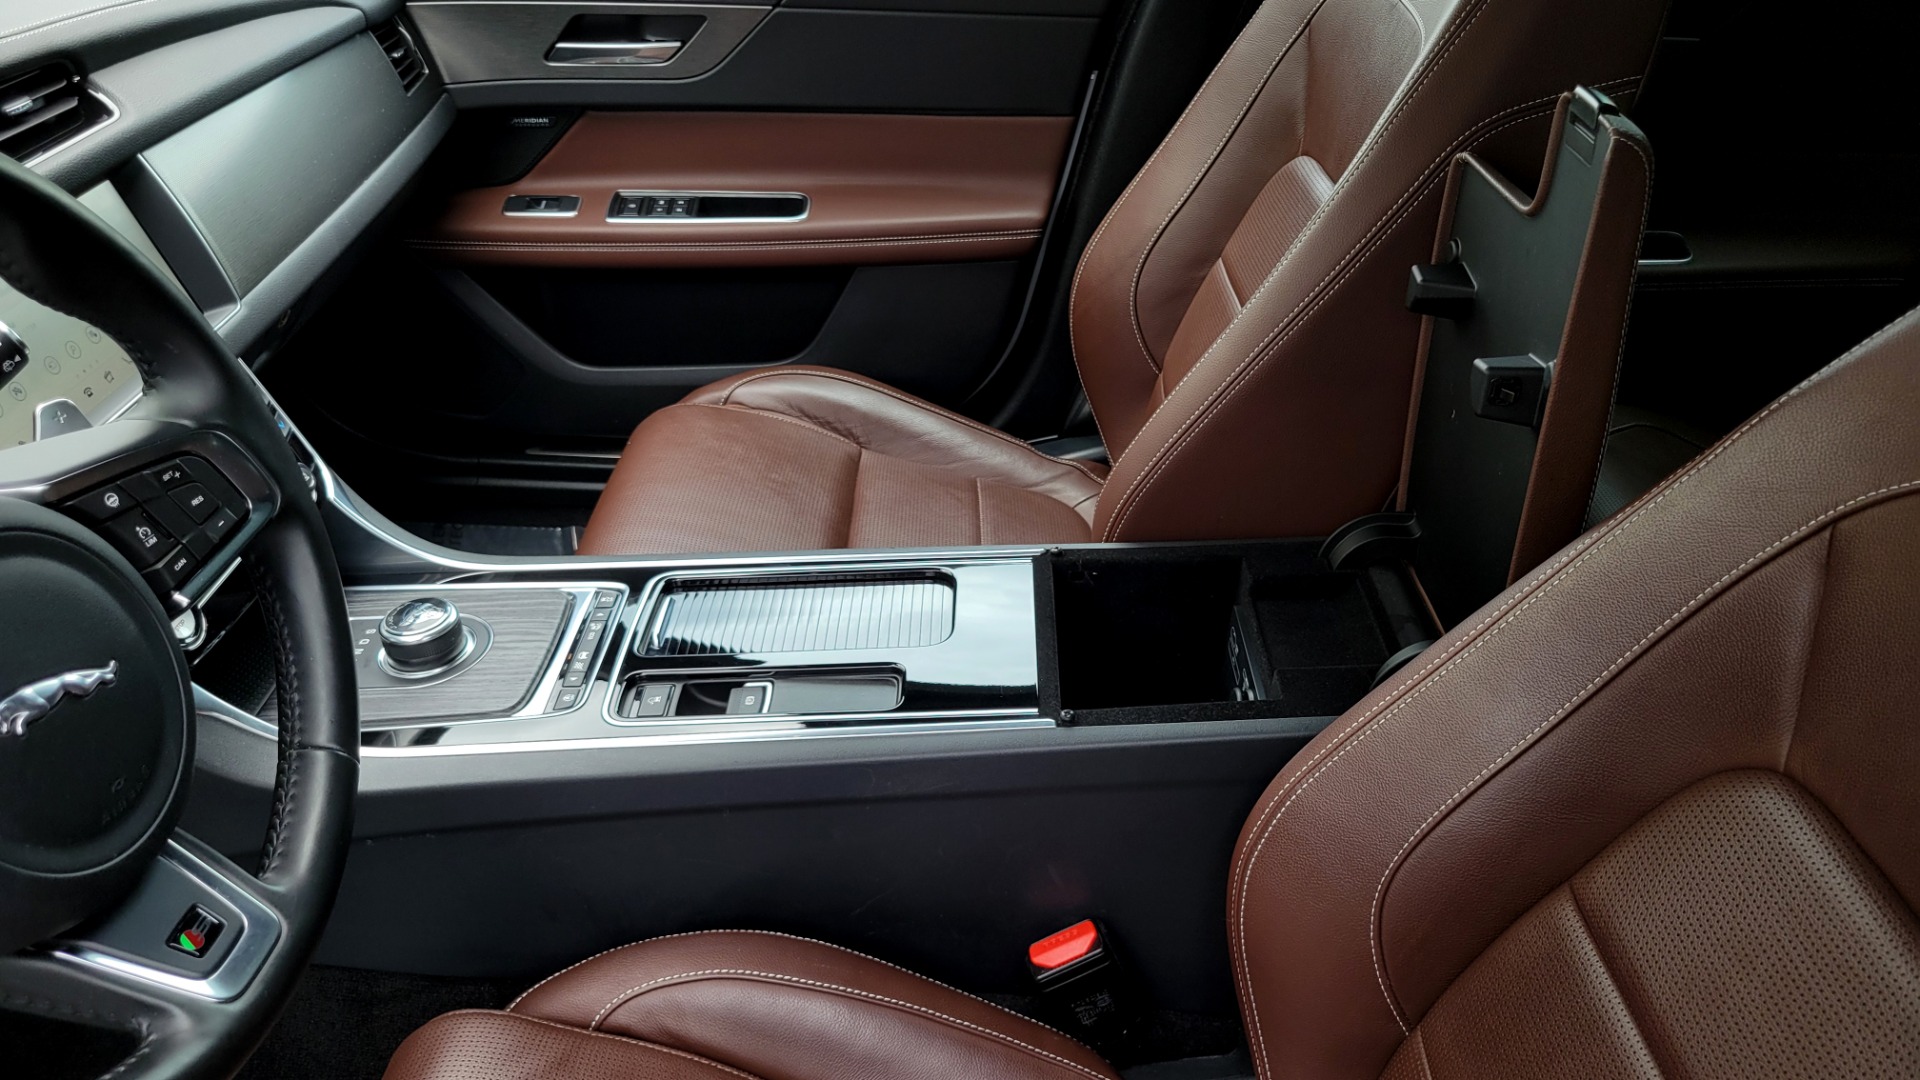 Jaguar XF Interior & Exterior Digital Journey Recorder plus GPS Tracker 